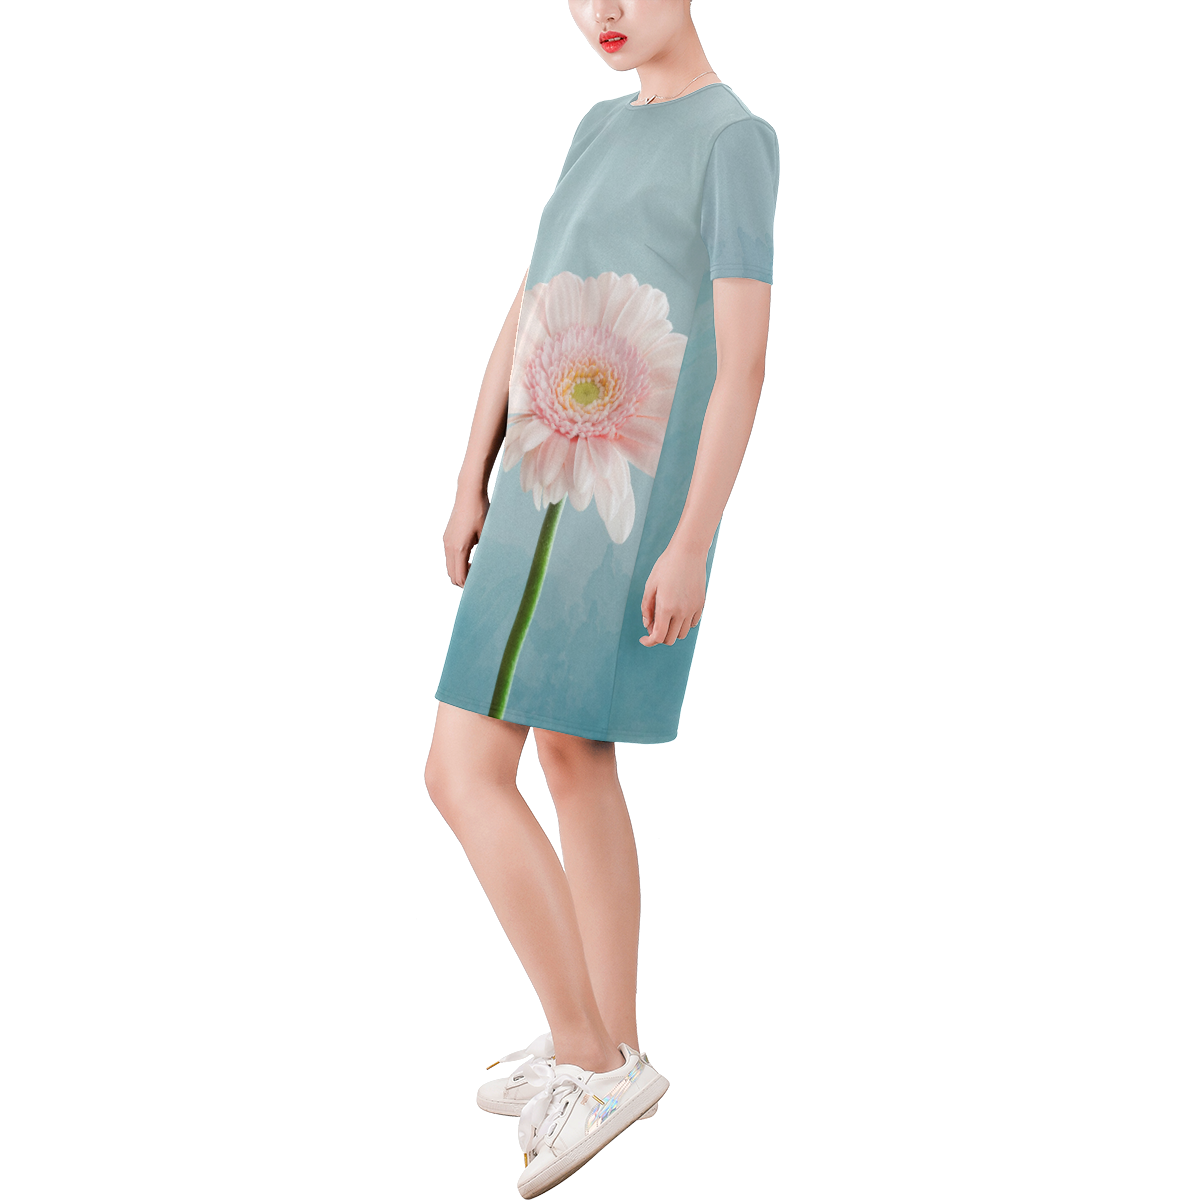 Gerbera Daisy - Pink Flower on Watercolor Blue Short-Sleeve Round Neck A-Line Dress (Model D47)